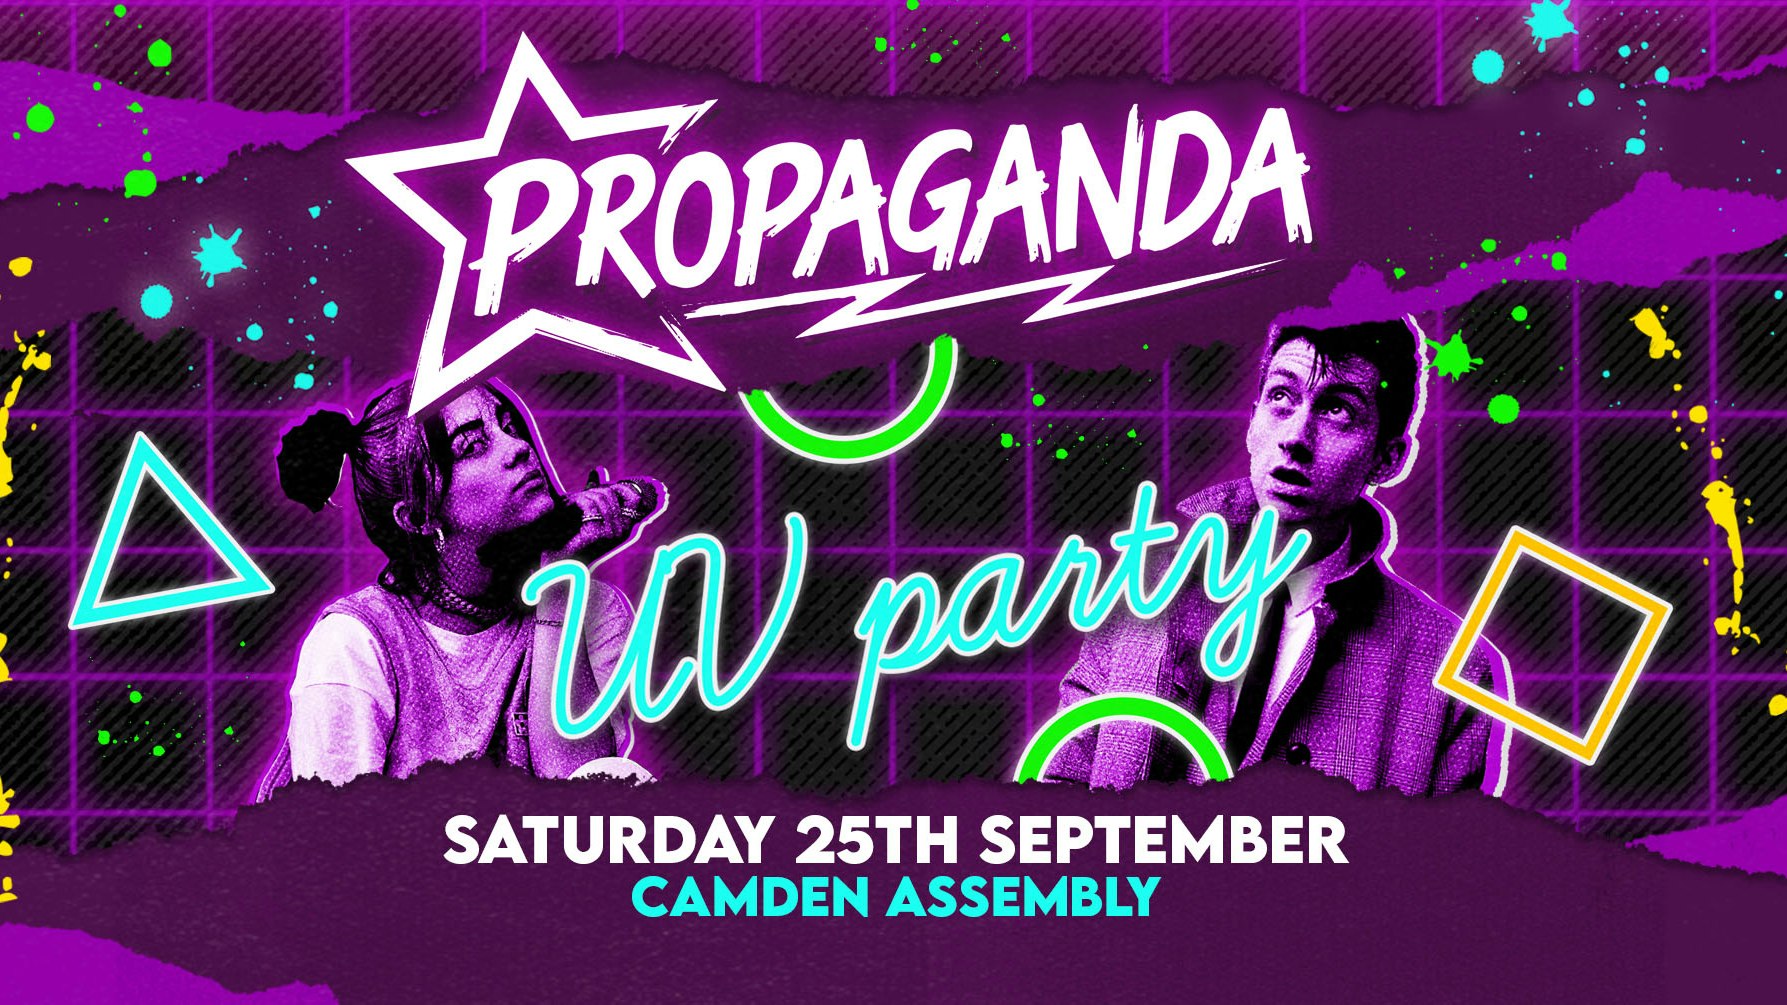 Propaganda London – UV Party!